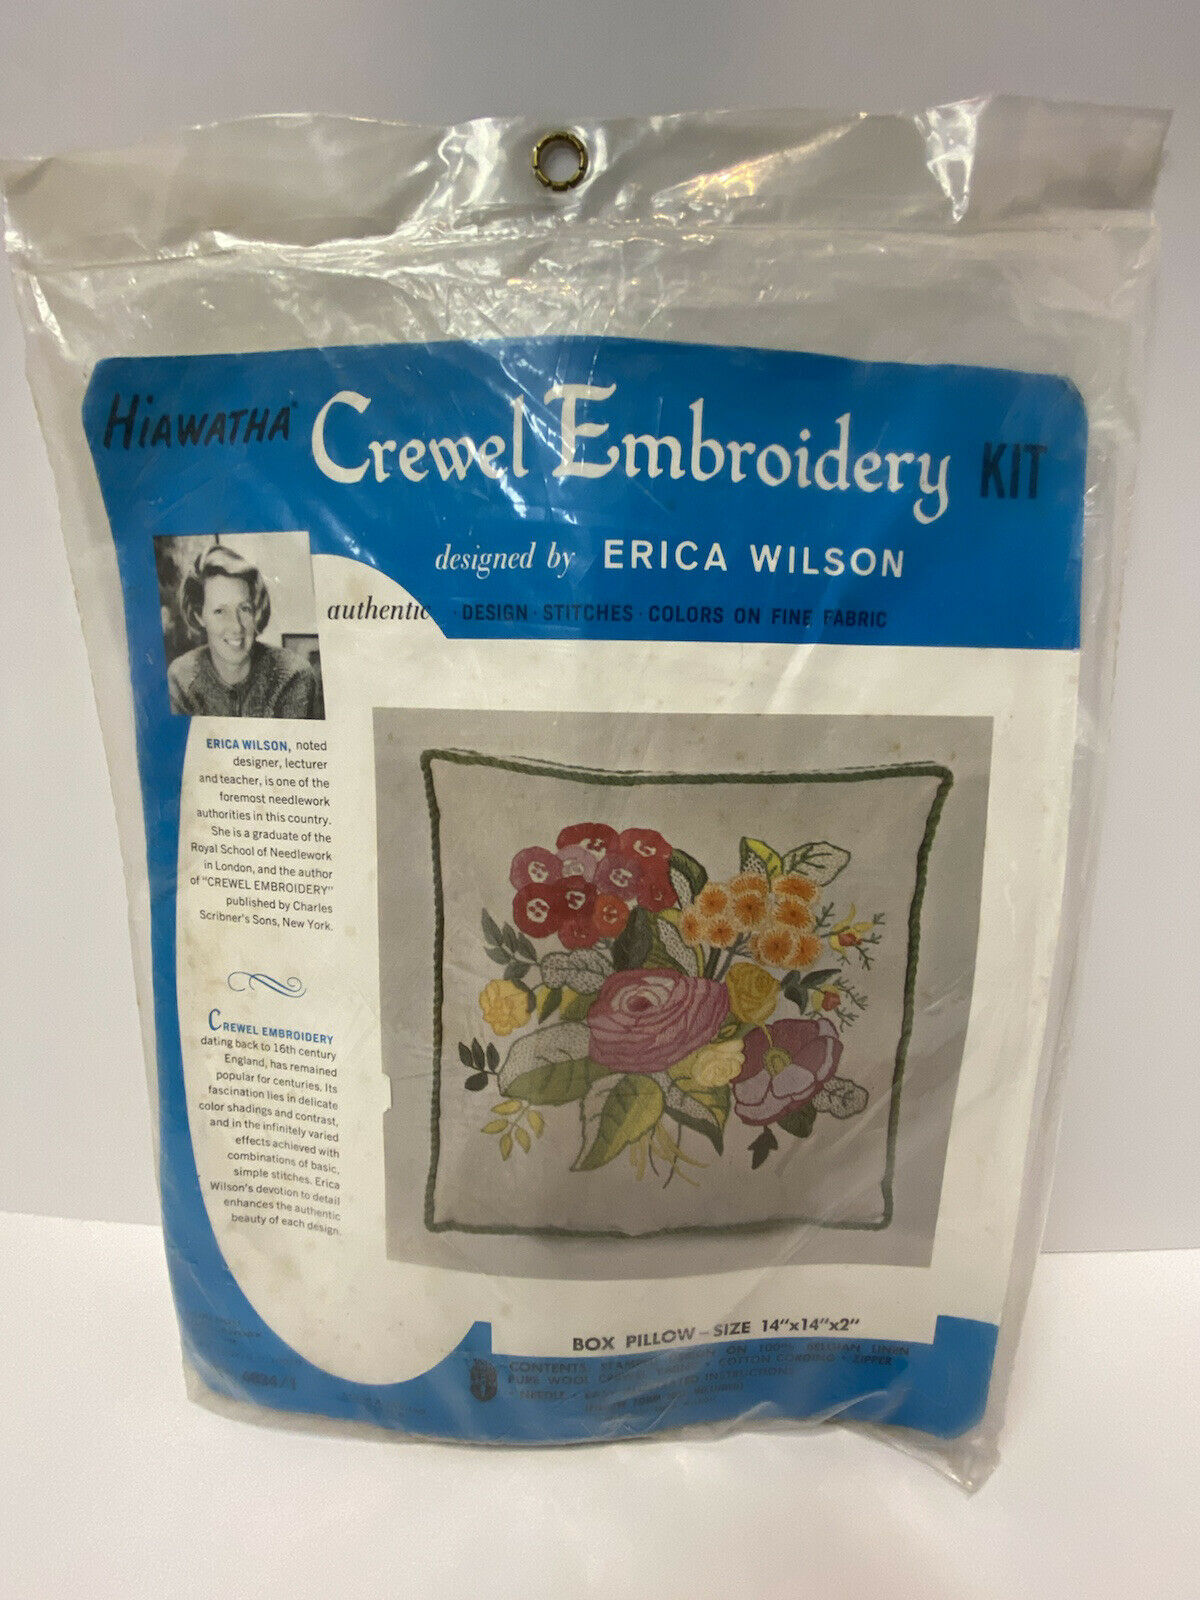 Vintage Erica Wilson Hiawatha Crewel Embroidery Kit Box Pillow #6834  14x14x2